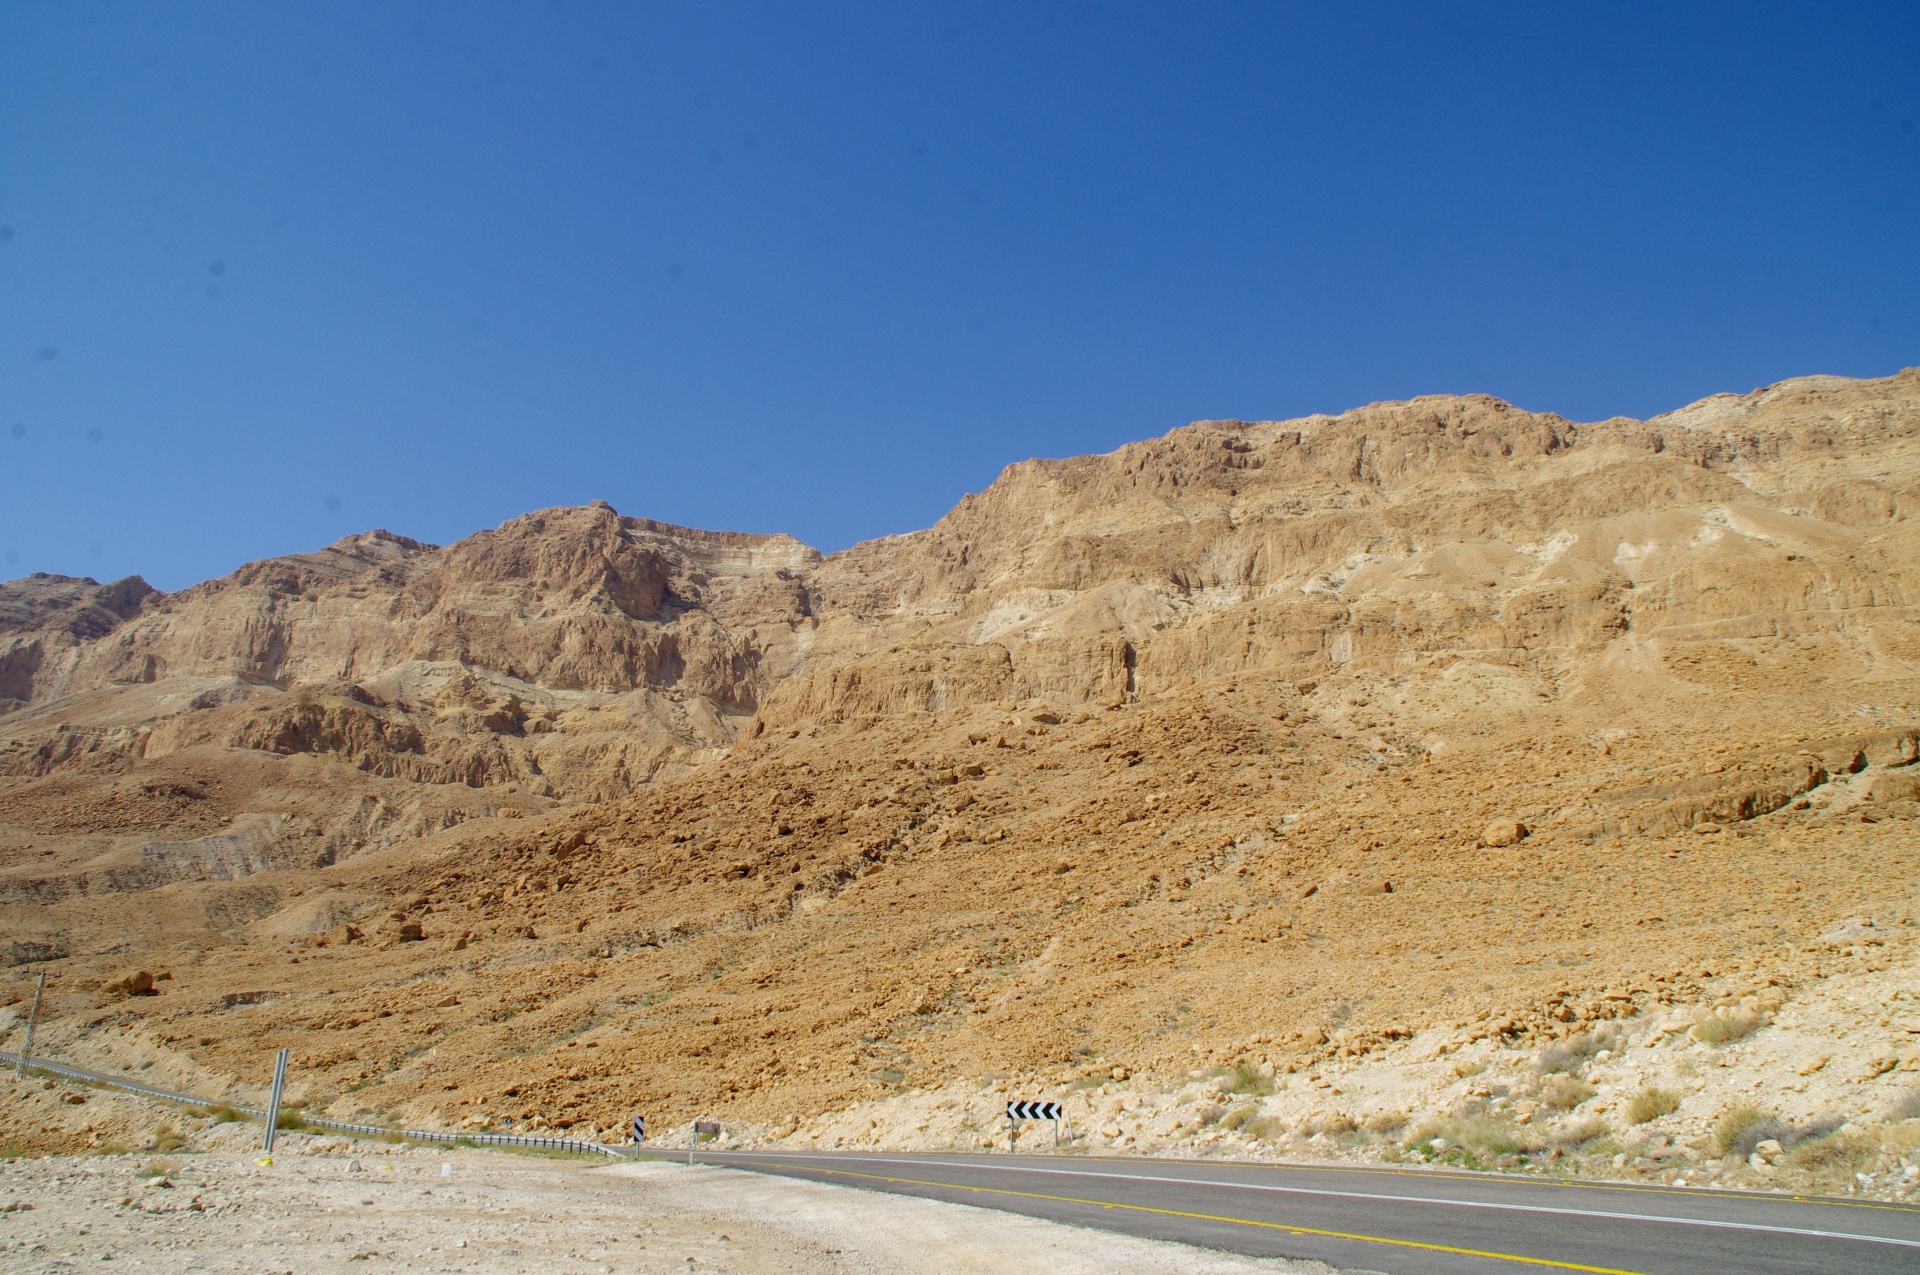 Small road along desert mountain range in Israel